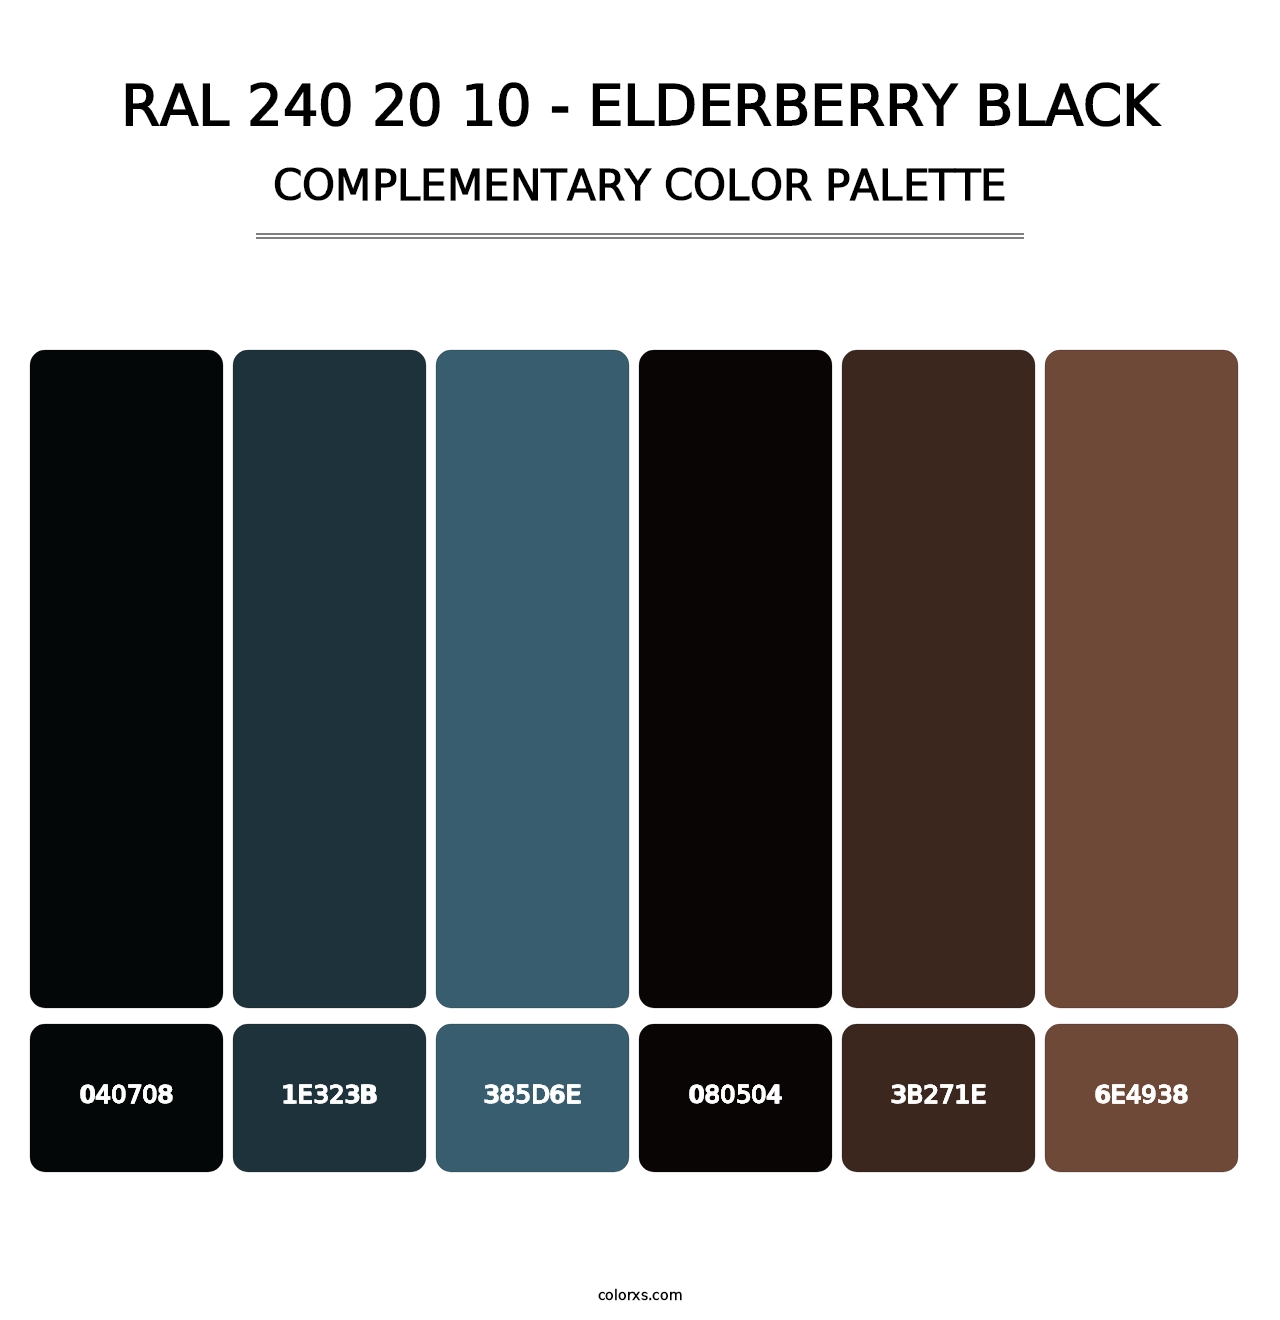 RAL 240 20 10 - Elderberry Black - Complementary Color Palette